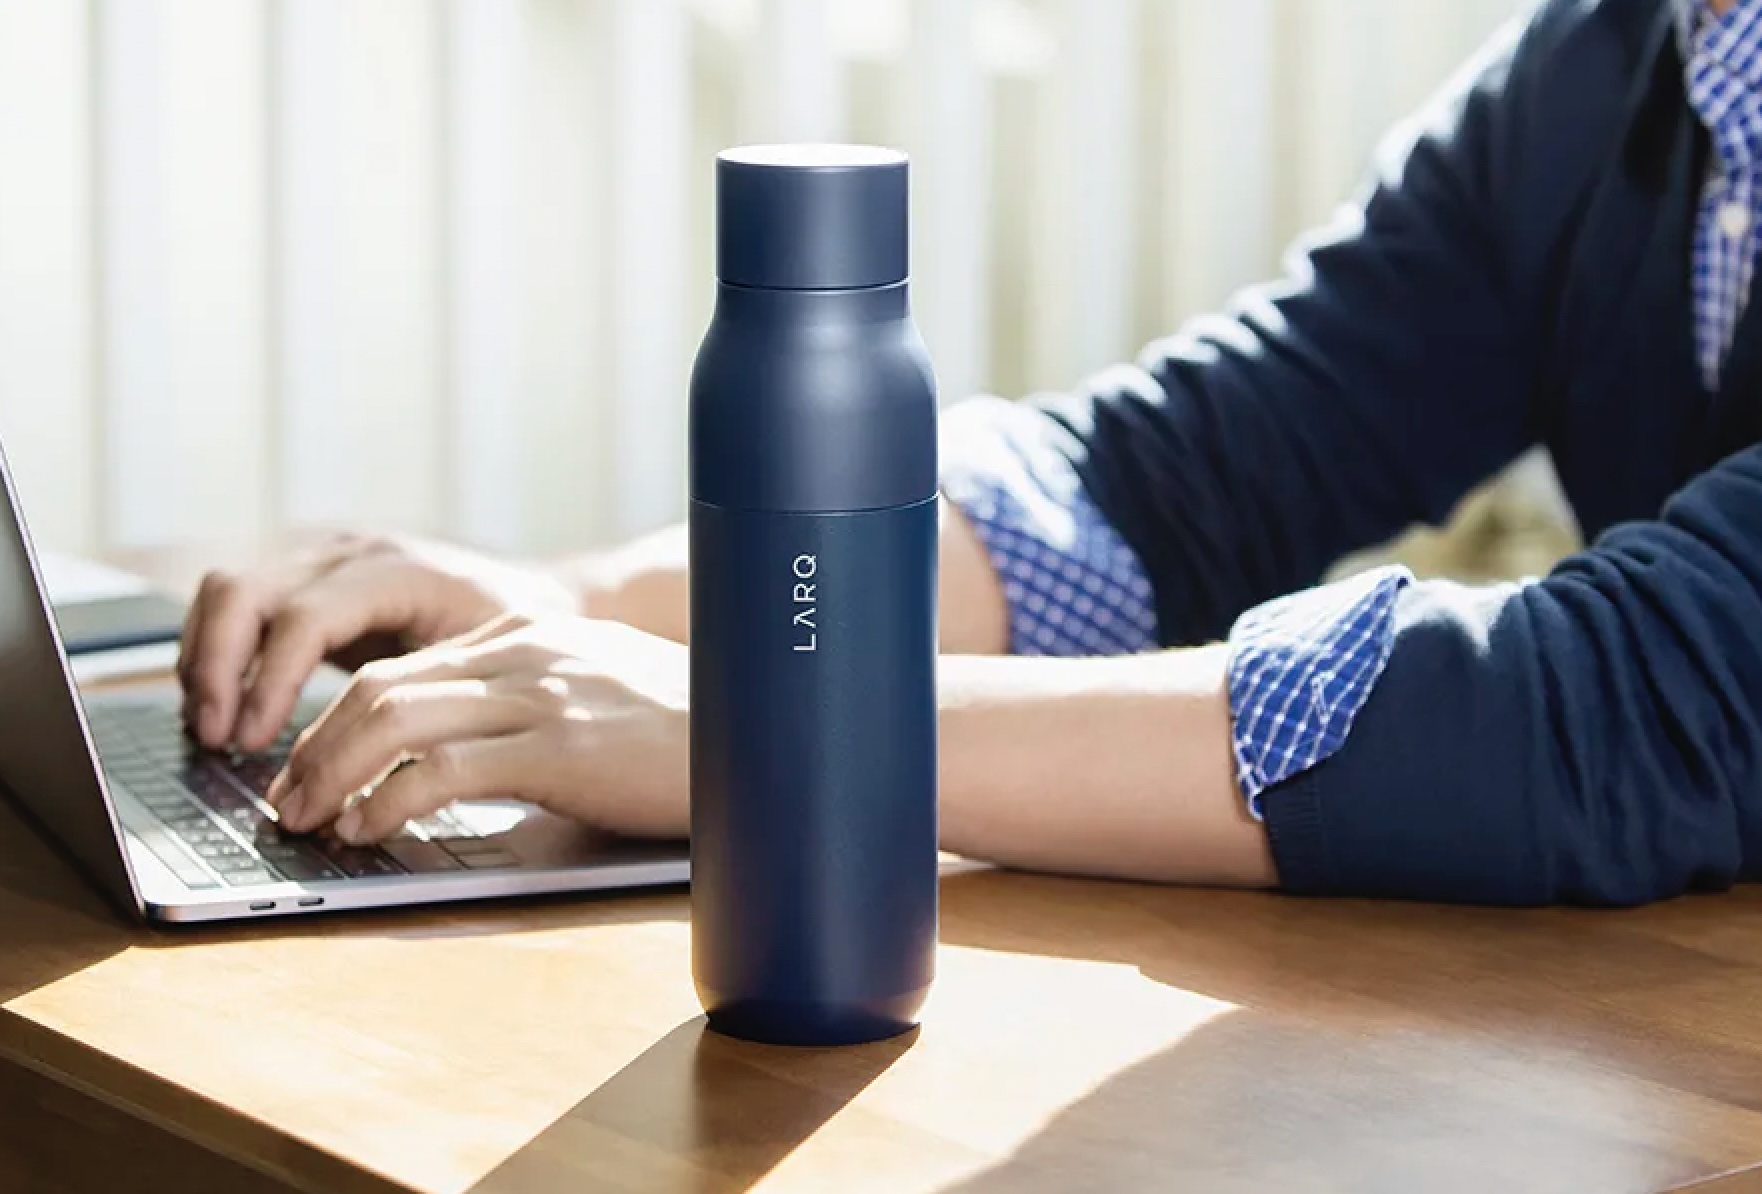 Best smart health/fitness devices gift guide - Larq Smart Water Bottle